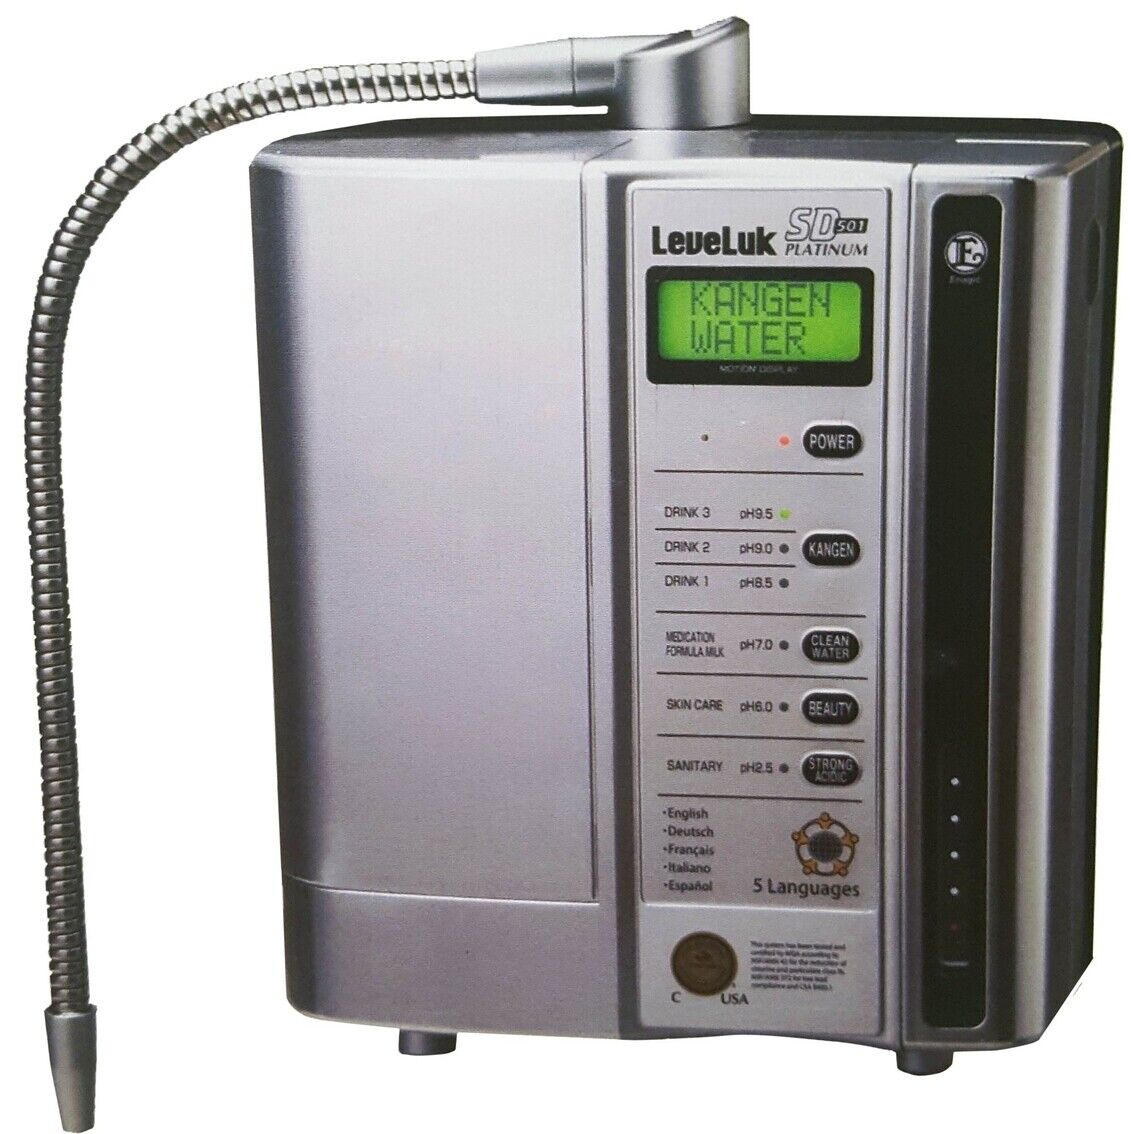 Máquina de filtro de ionizador de agua Enagic Leveluk SD501 Platinum Kangen NUEVO